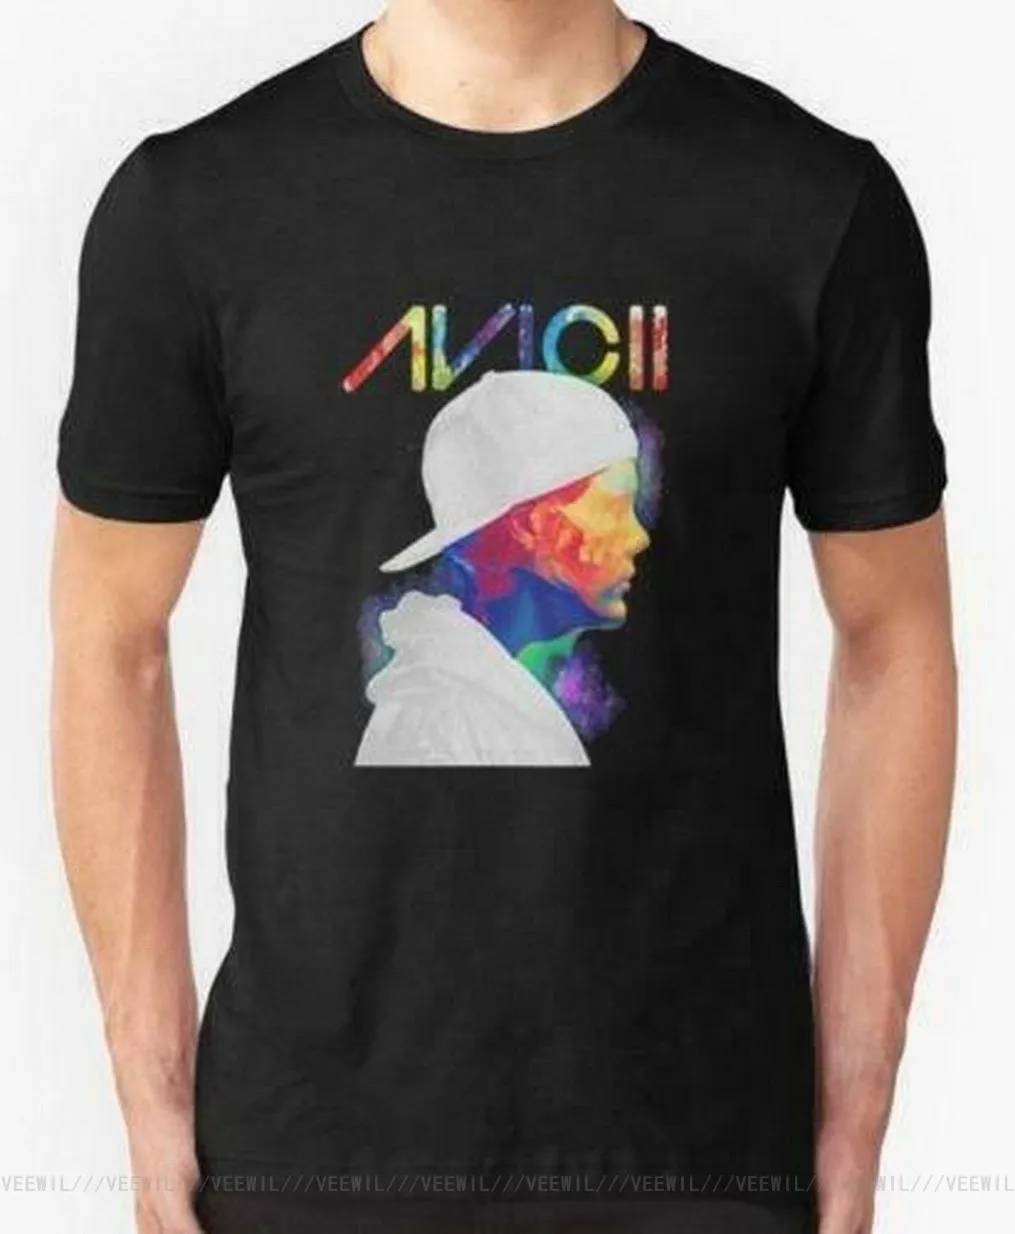 Новинка Мужская футболка AVICII DJ-2 США размер S M L XL 2XL 3XL FQ1 спортивная одежда мужские